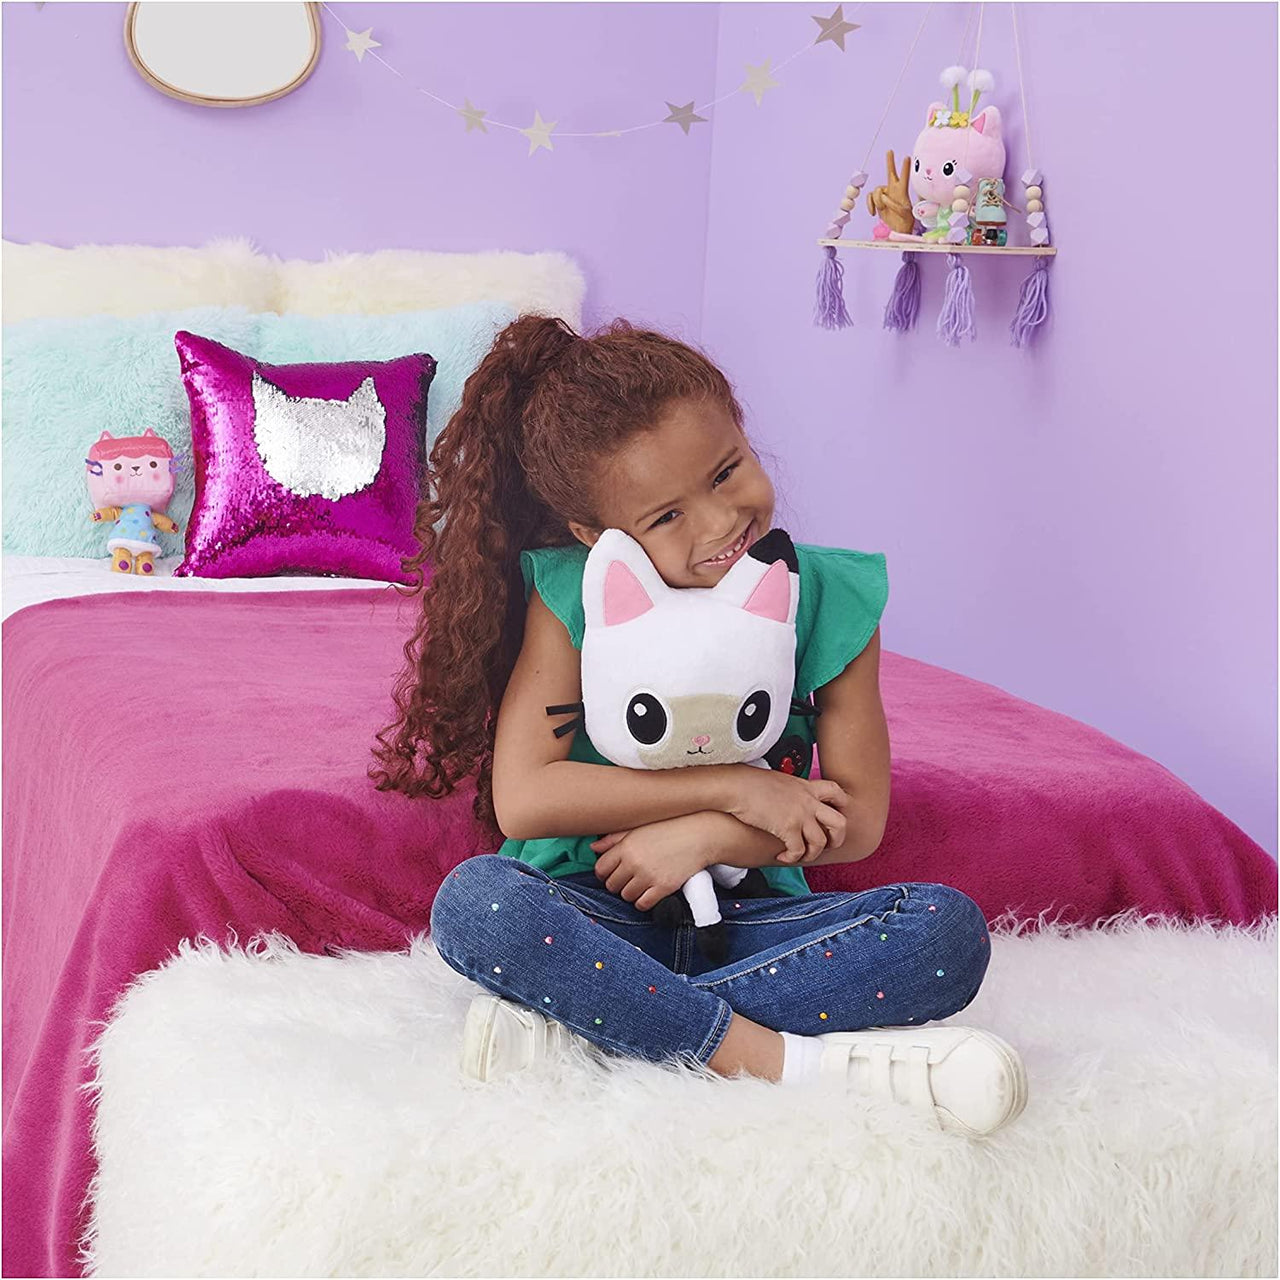 Gabby's Dollhouse Talking Pandy Paws Plush Toy - Unicorn & Punkboi